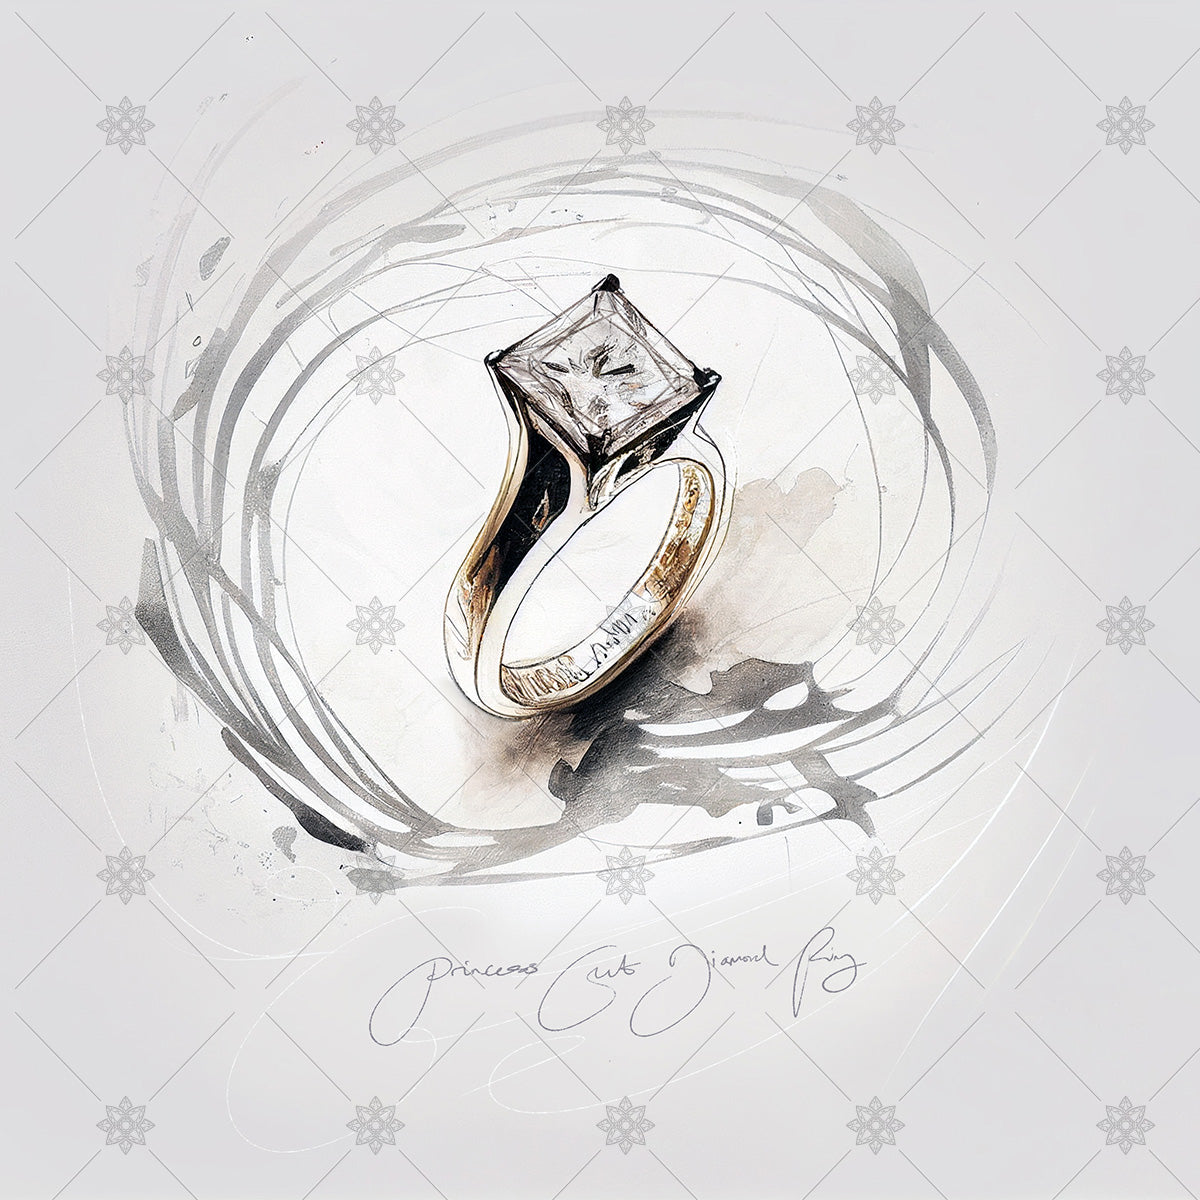 1 Carat Princess Cut Solitaire Diamond 18K Rose Gold Ring JL AU 19002R